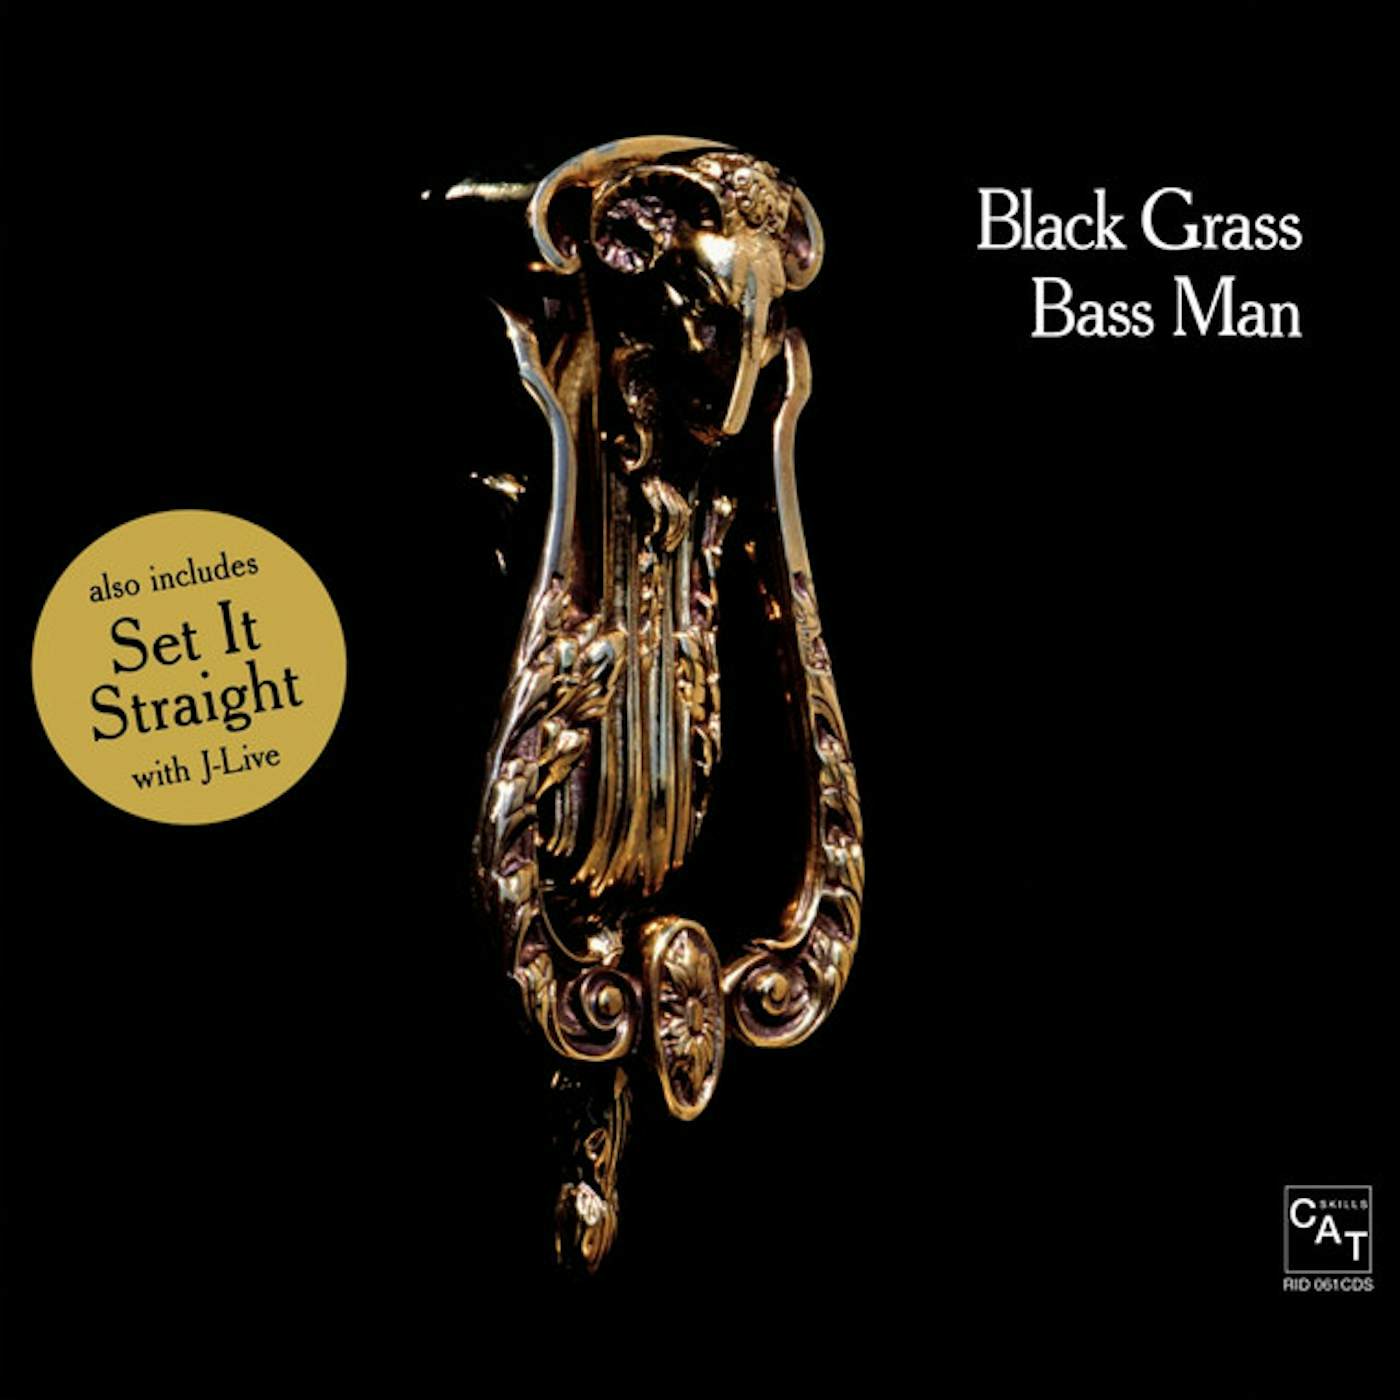 Black Grass Bass Man Vinyl Record